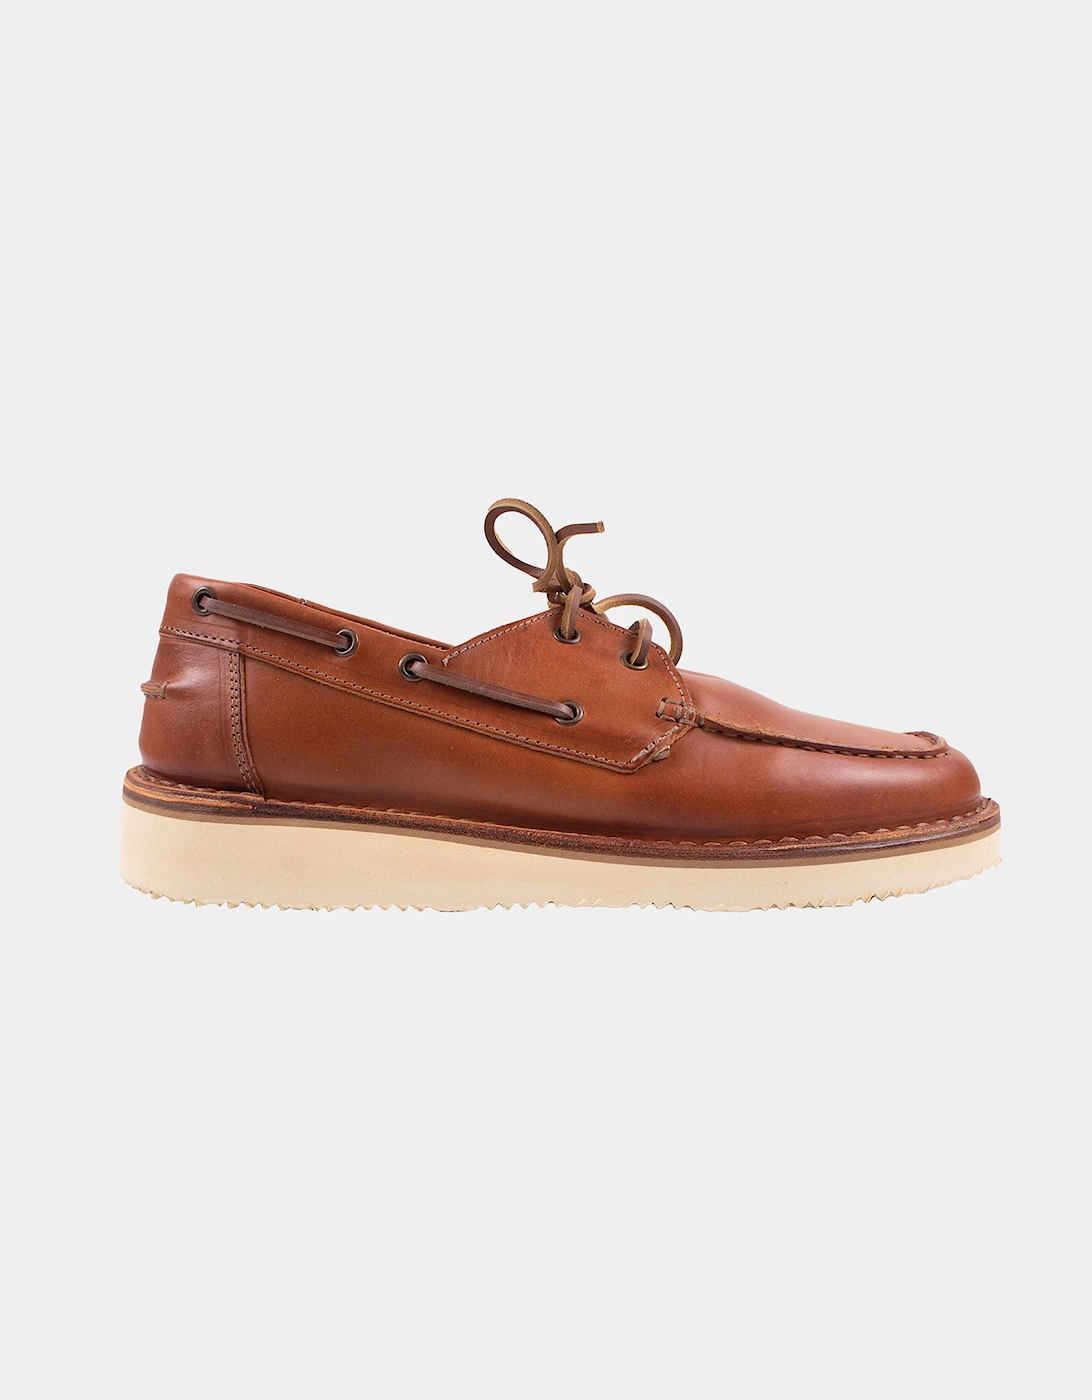 Boatflex Shoes - America, 5 of 4